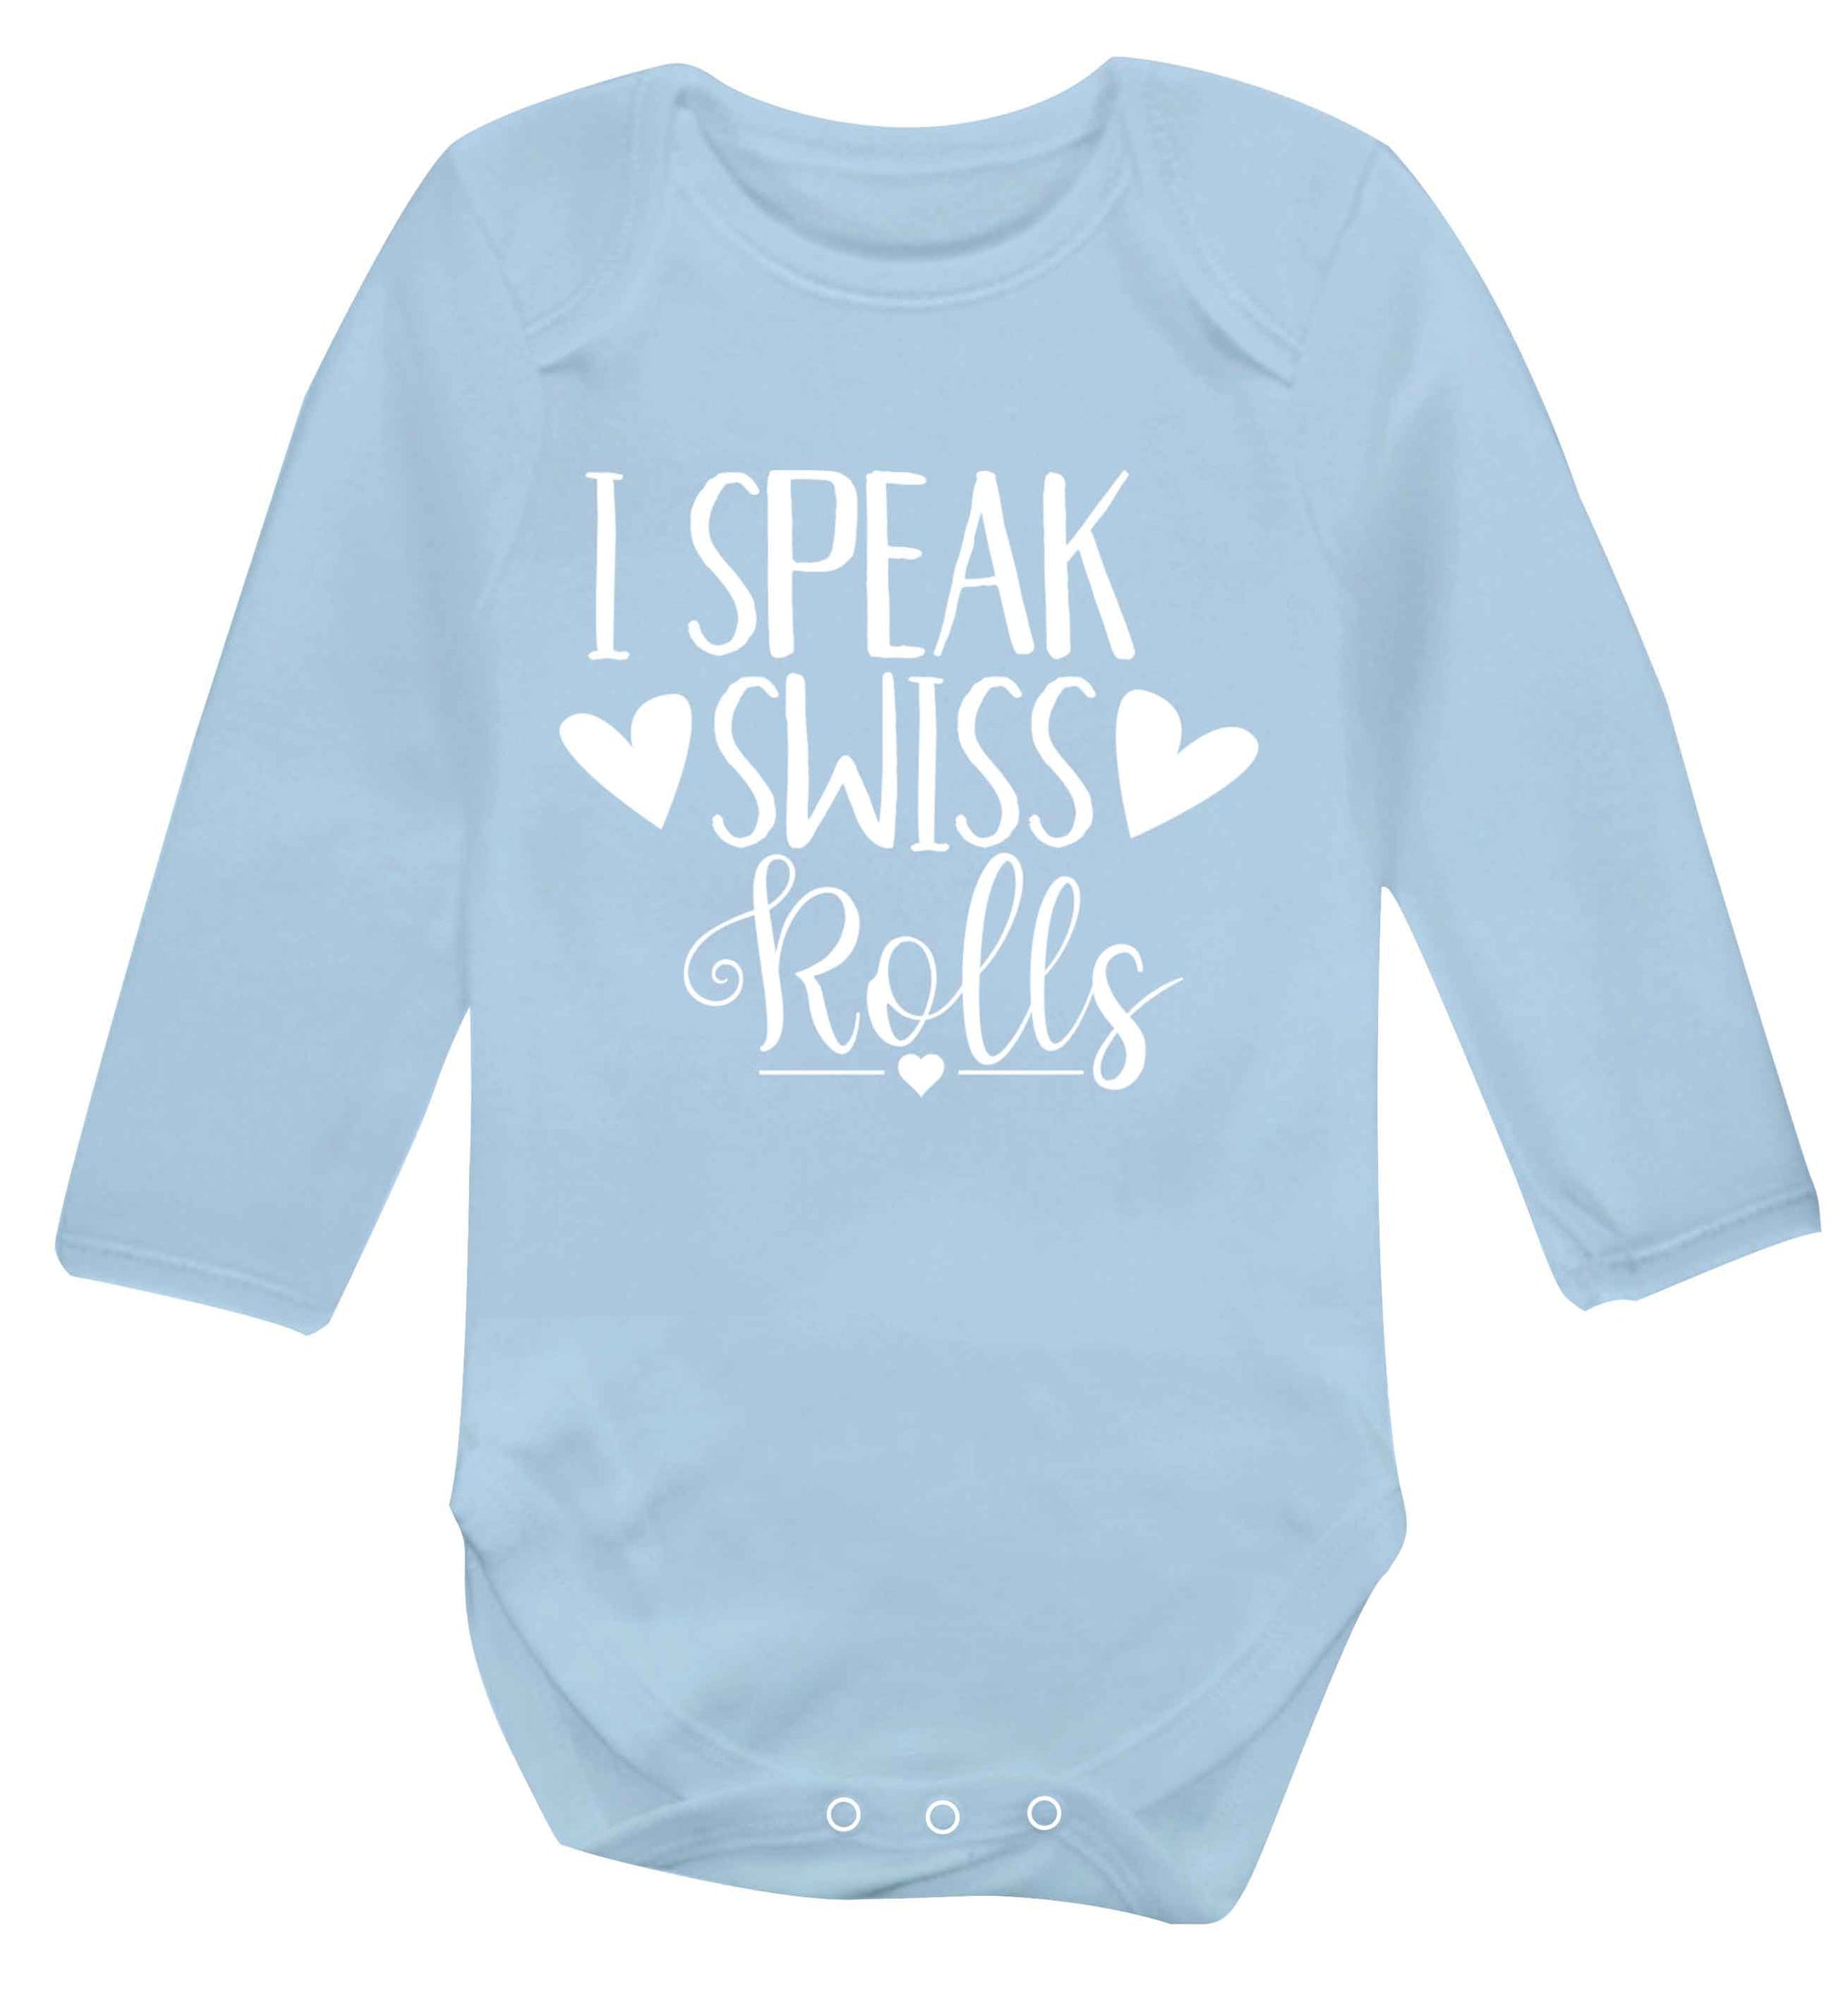 I speak swiss..rolls Baby Vest long sleeved pale blue 6-12 months